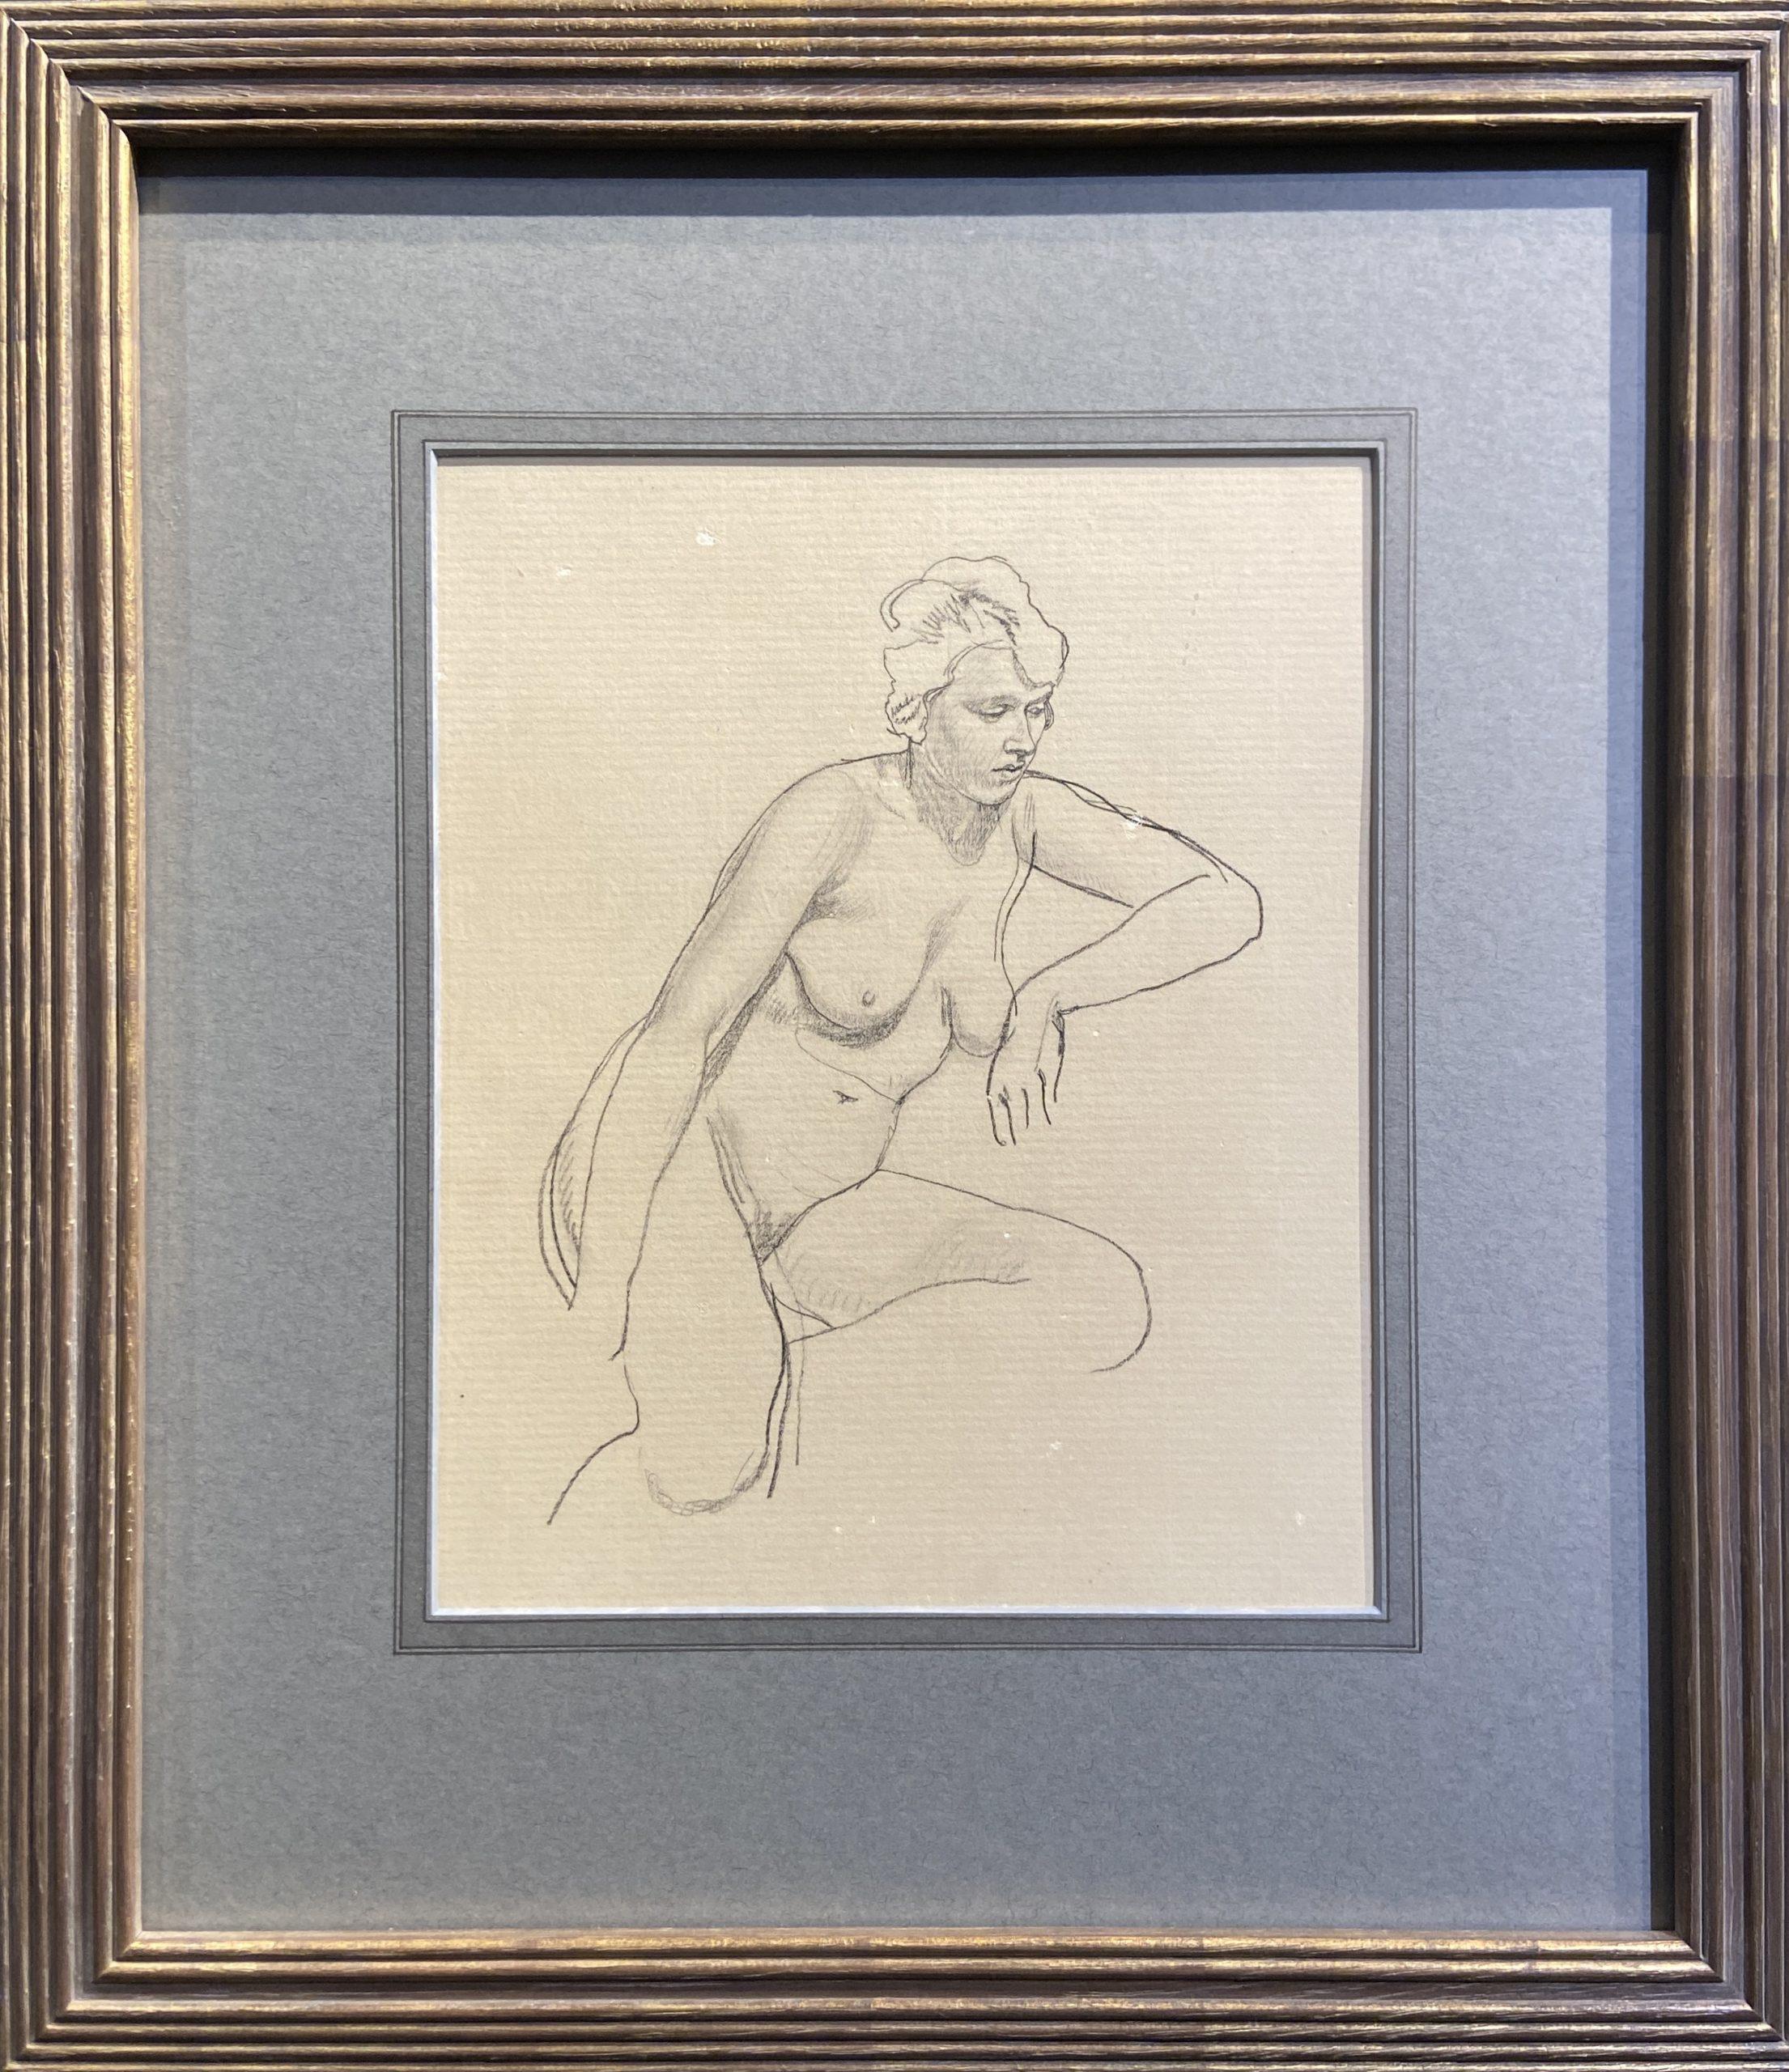 Nude Study, Graphite on Paper, 20th Century British Artwork